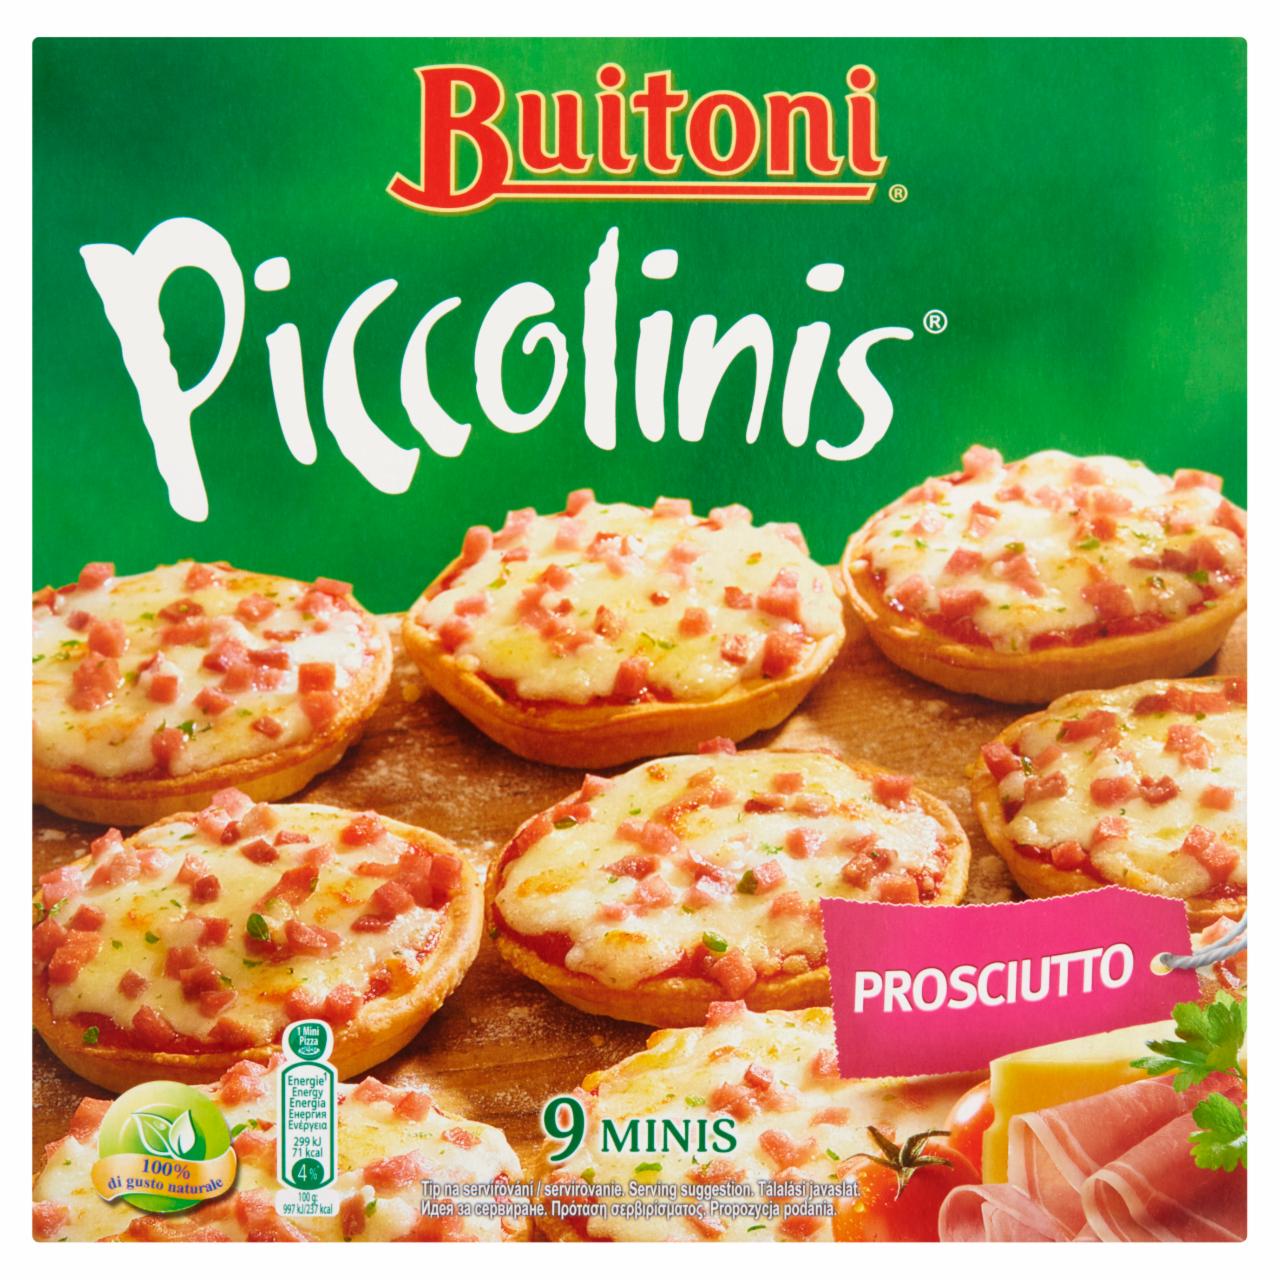 Képek - Buitoni Piccolinis Prosciutto gyorsfagyasztott mini pizza 9 db 270 g